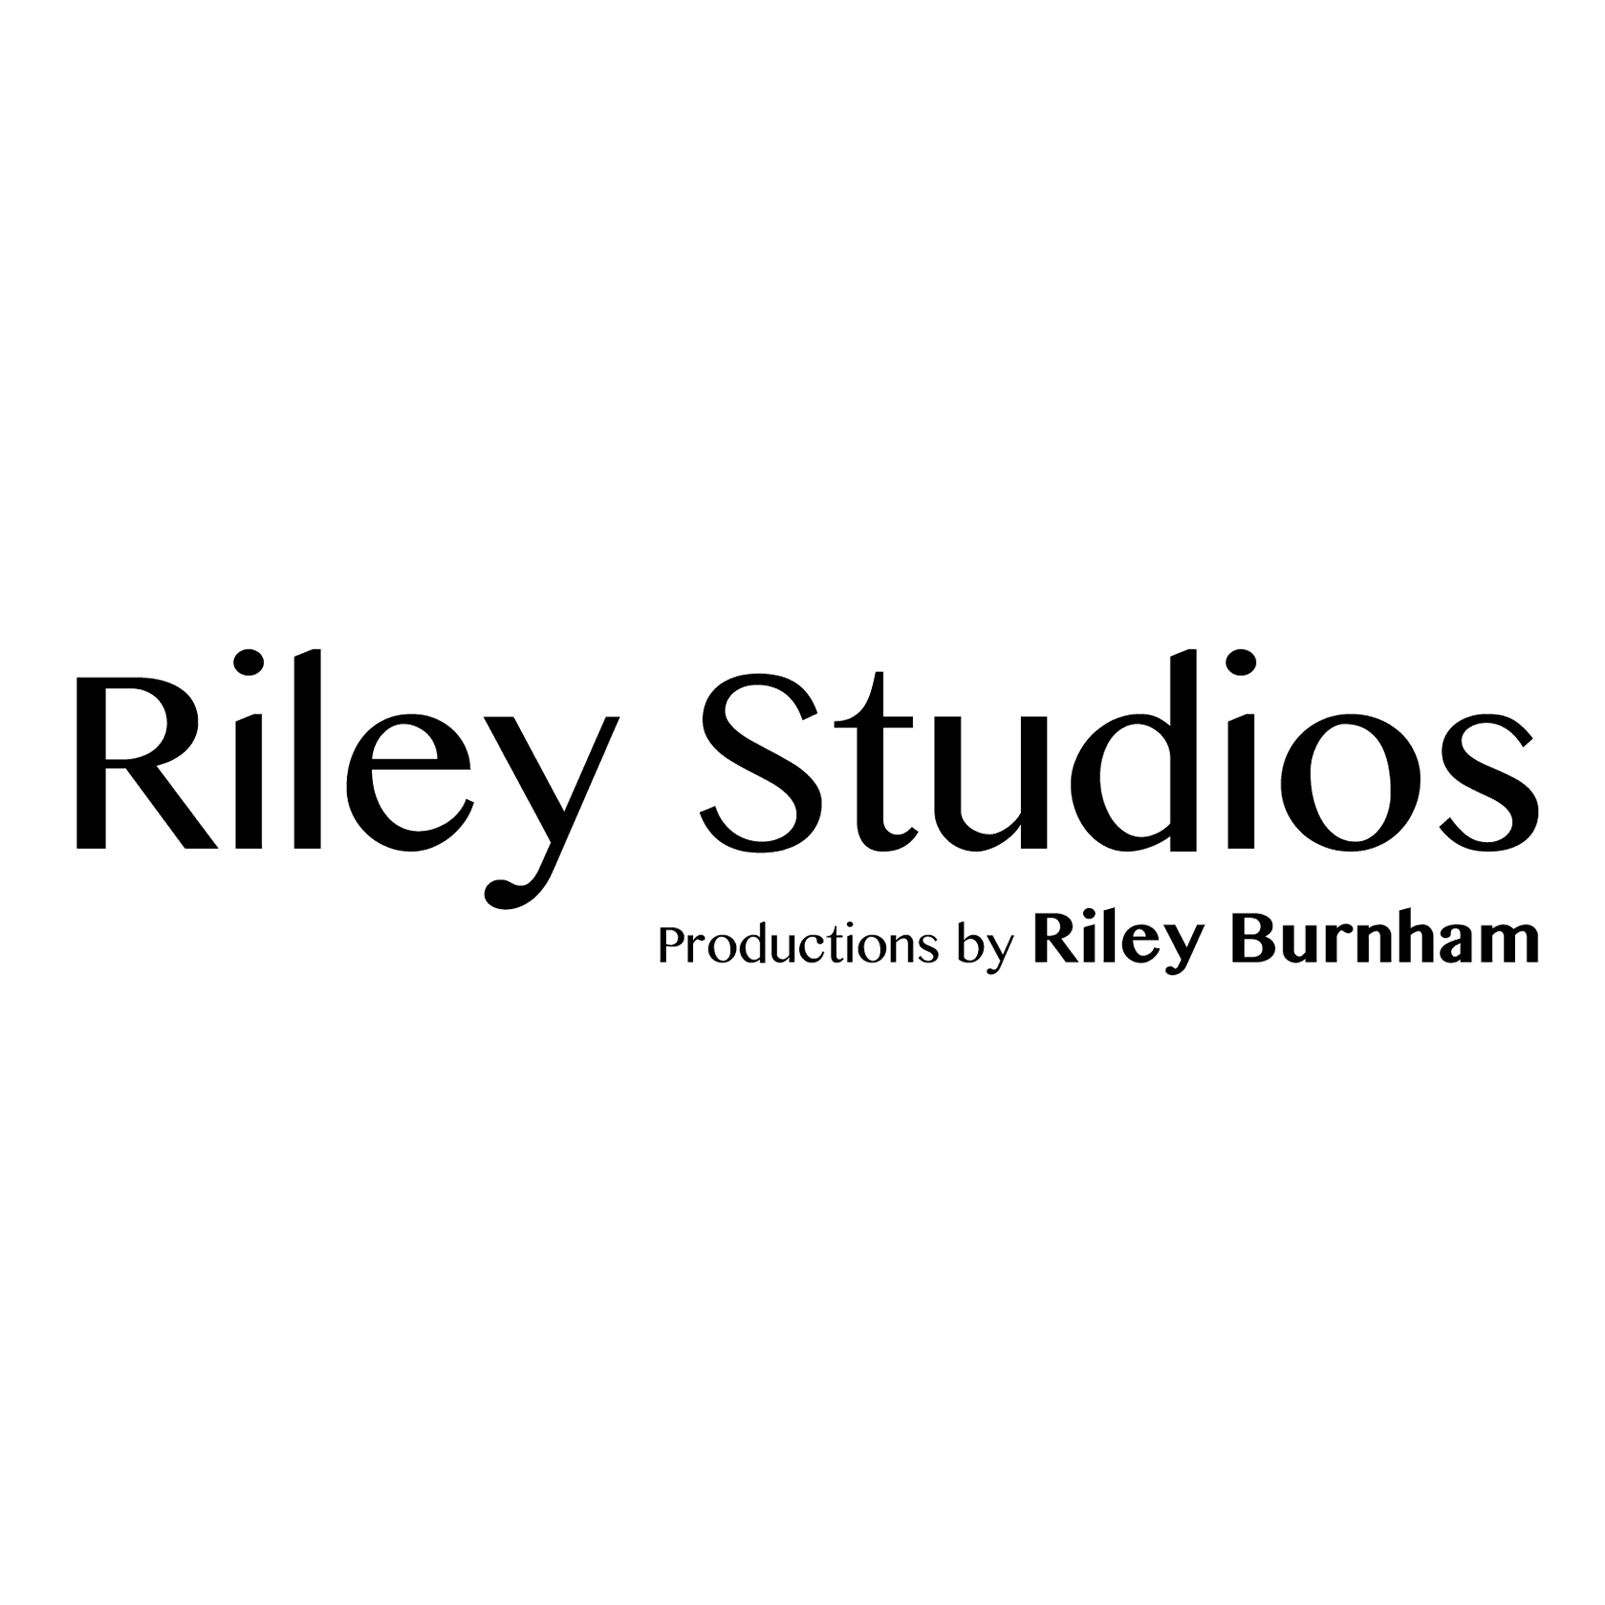 RileyStudios